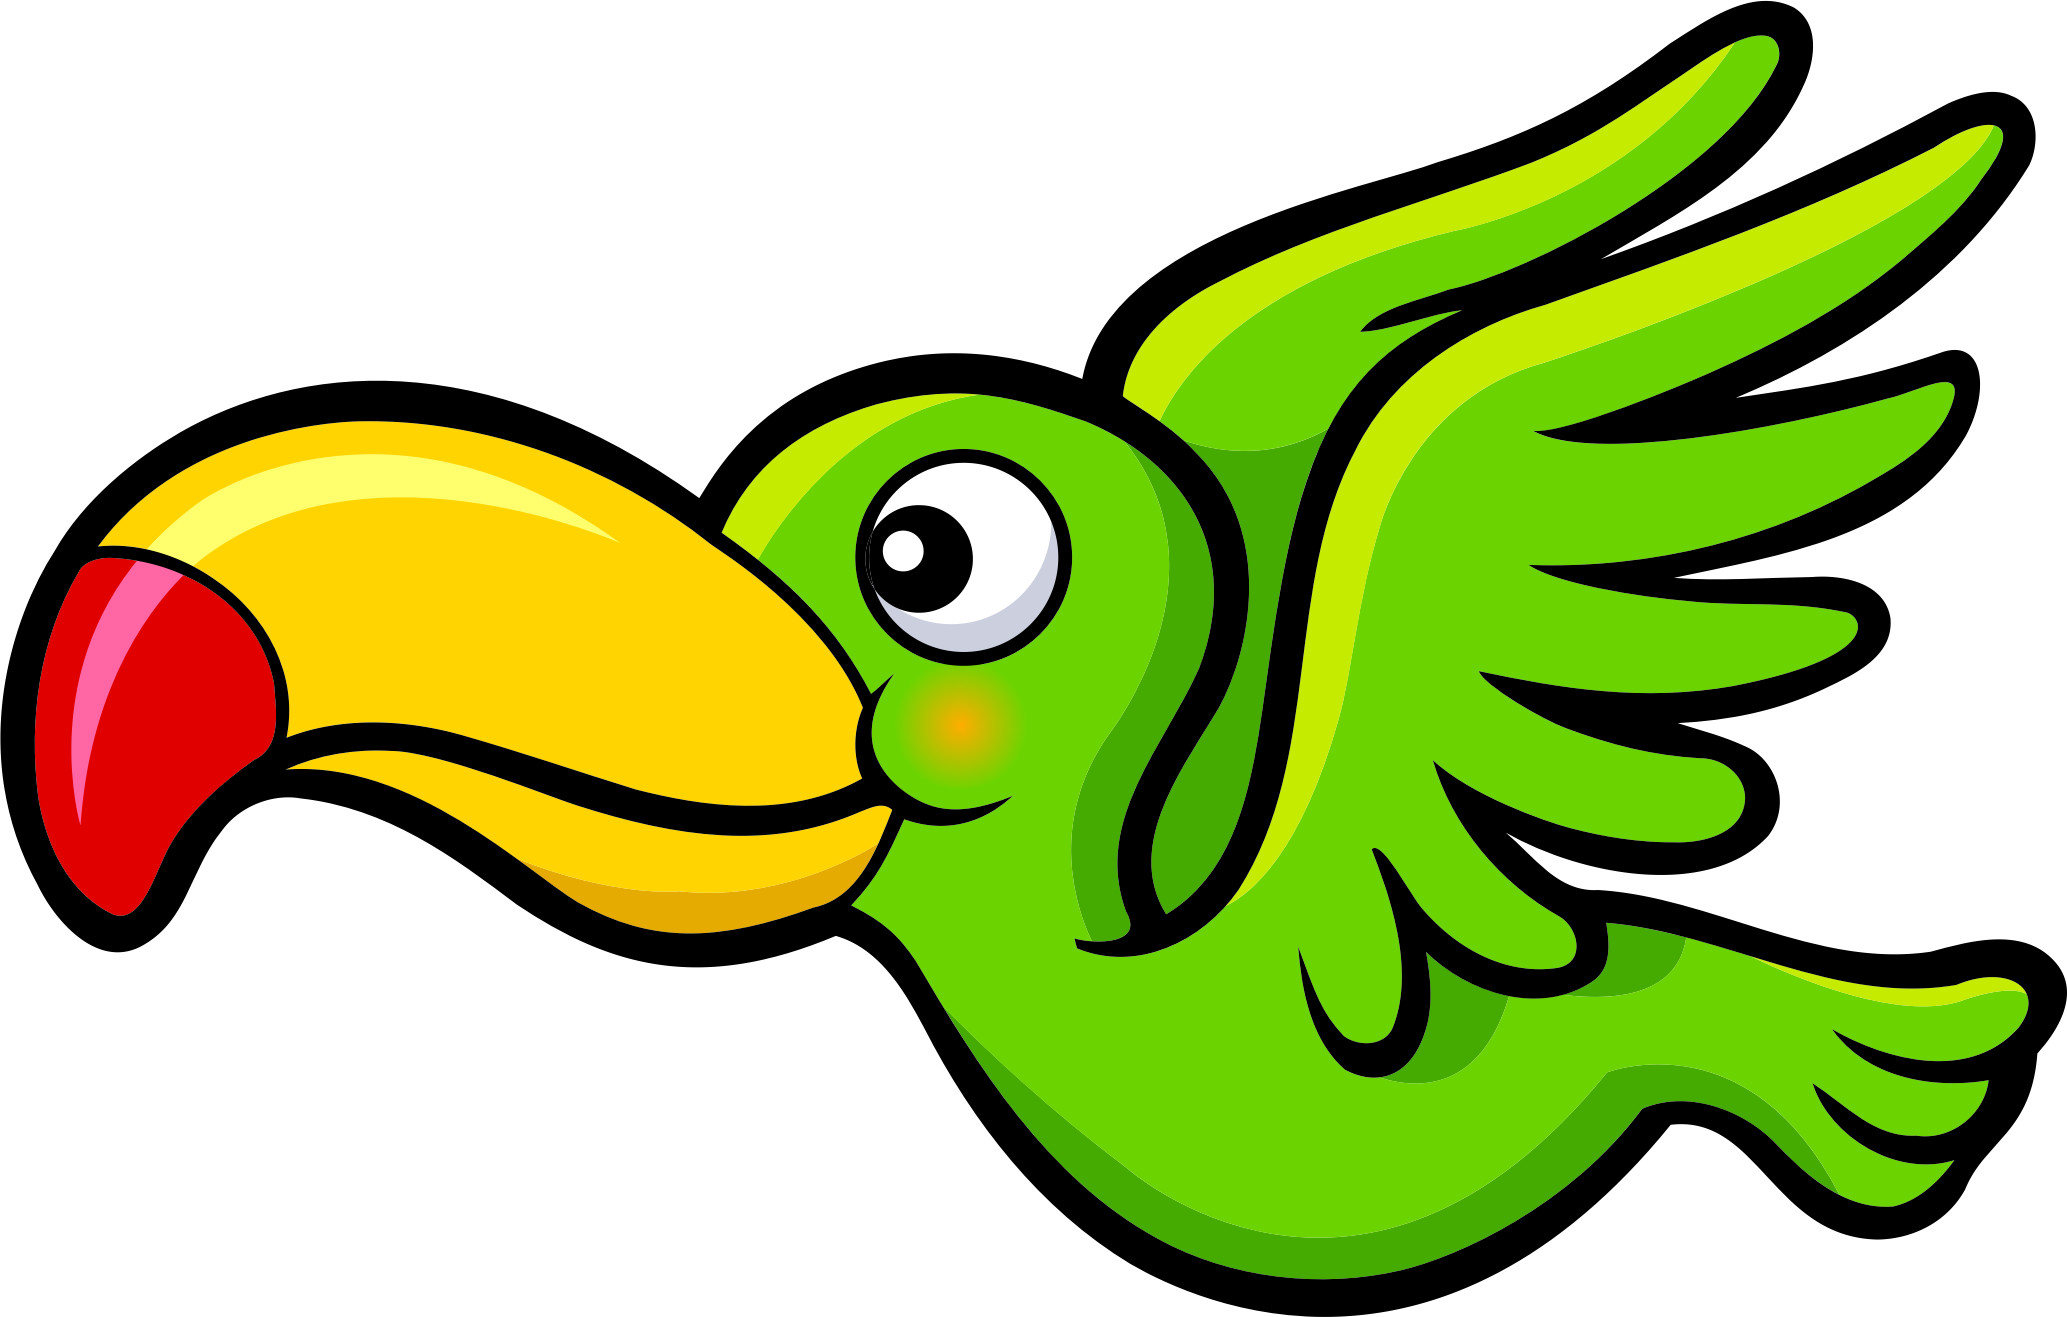 Medium Image - Animated Bird (1177x750)